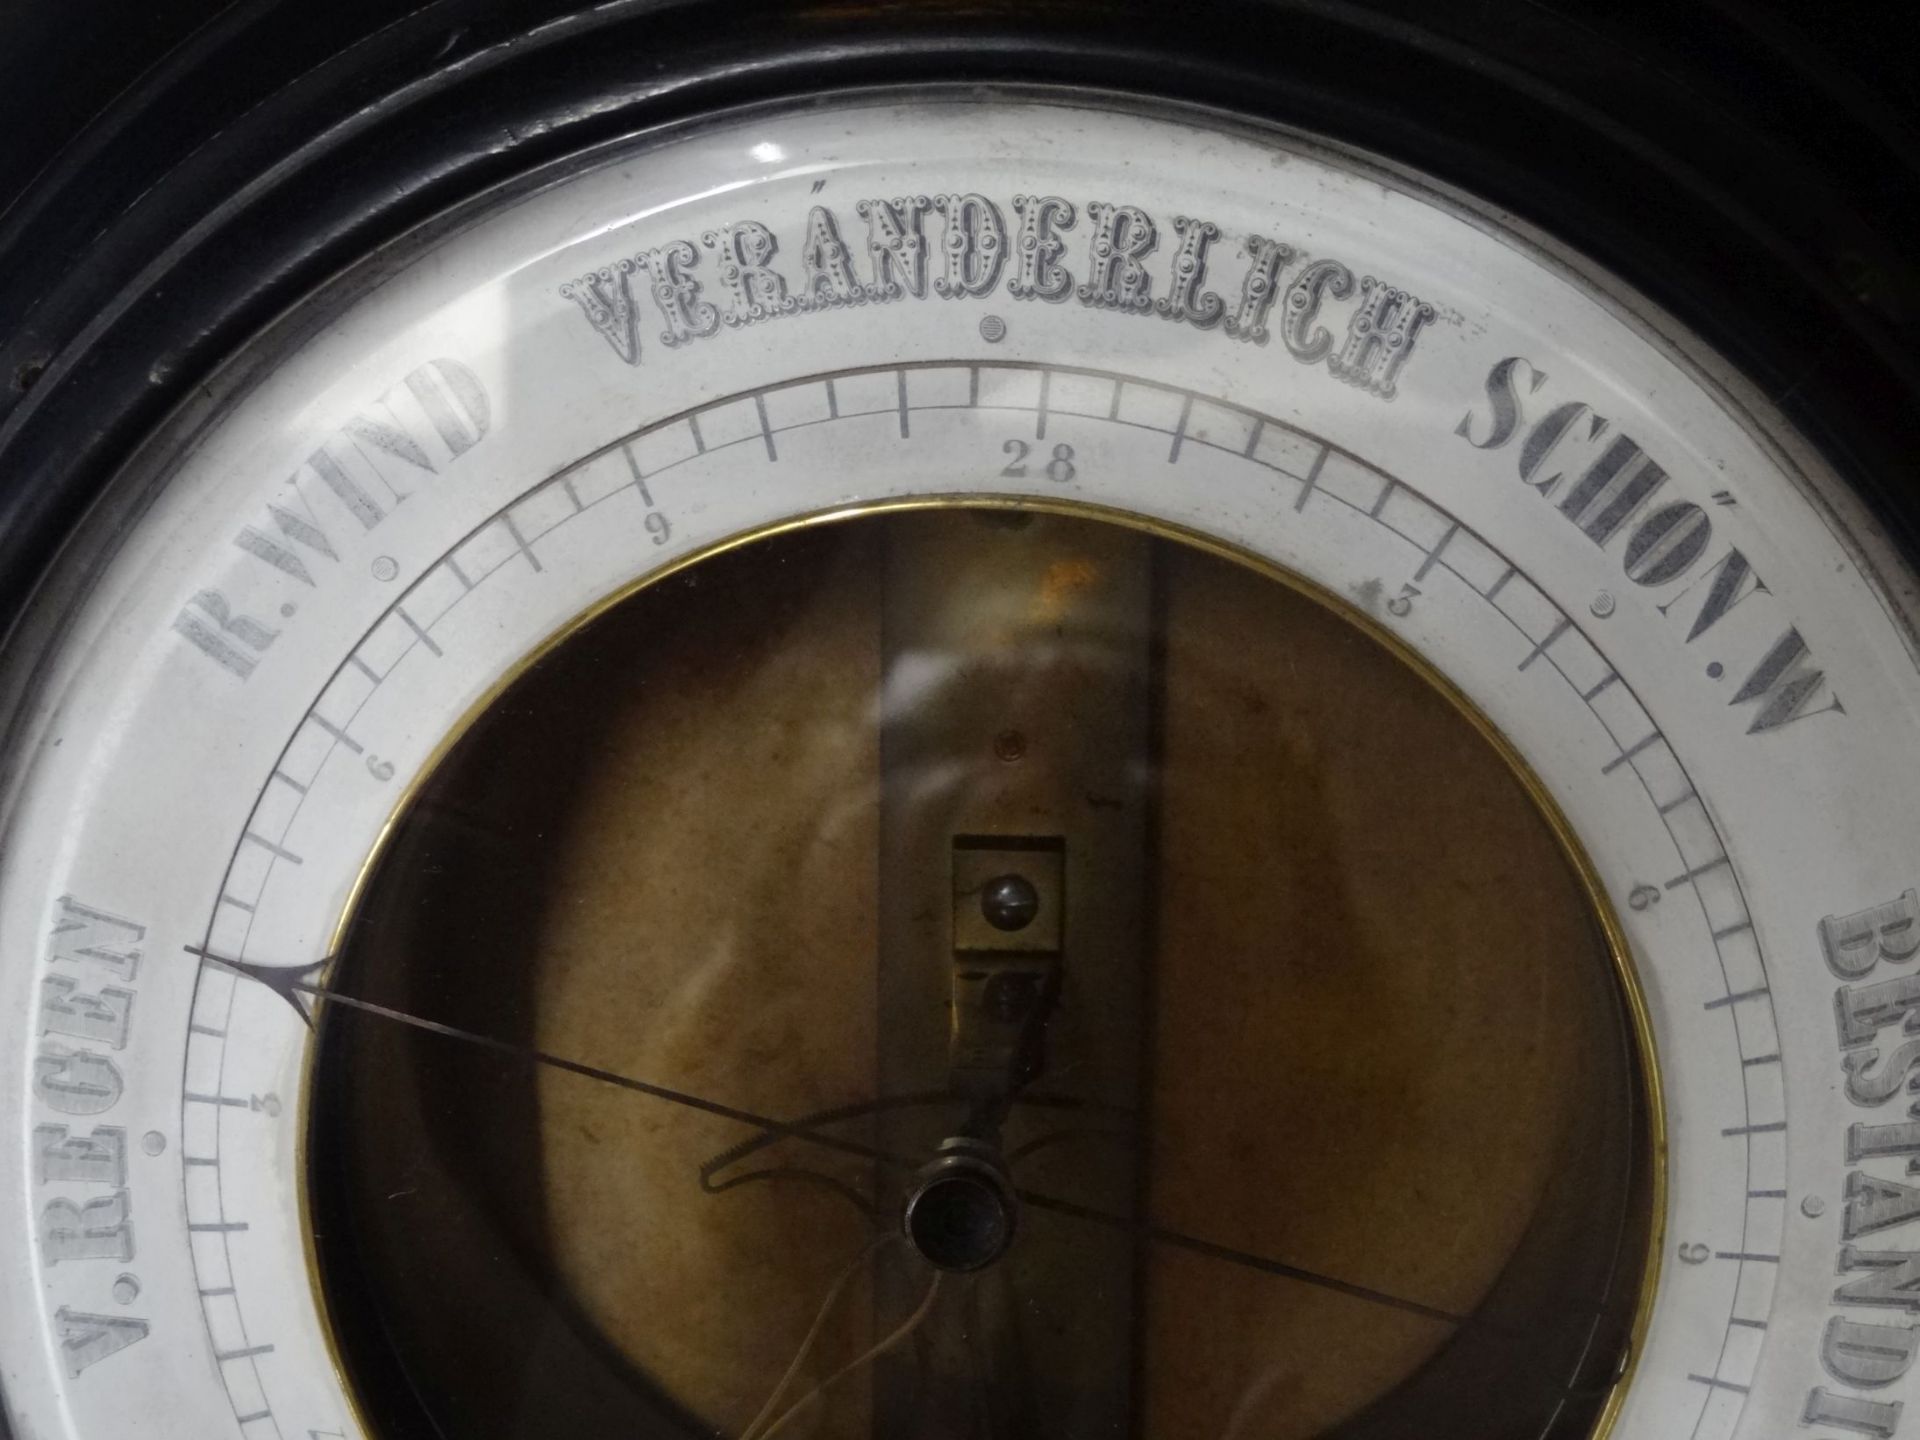 grosses Metall-Barometer in runden Holzgehäuse um 1850, D-33 c"""" - Bild 4 aus 6